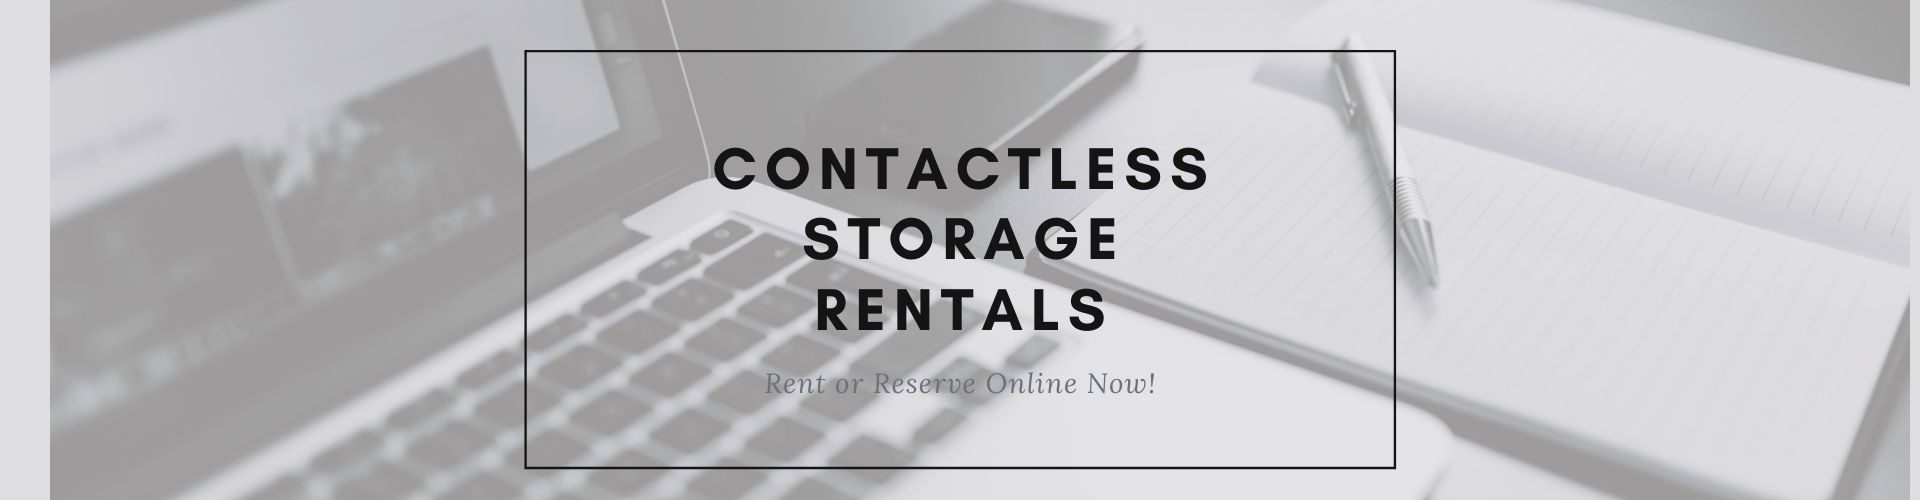 contactless storage rentals at Max Storage in Hurricane, UT